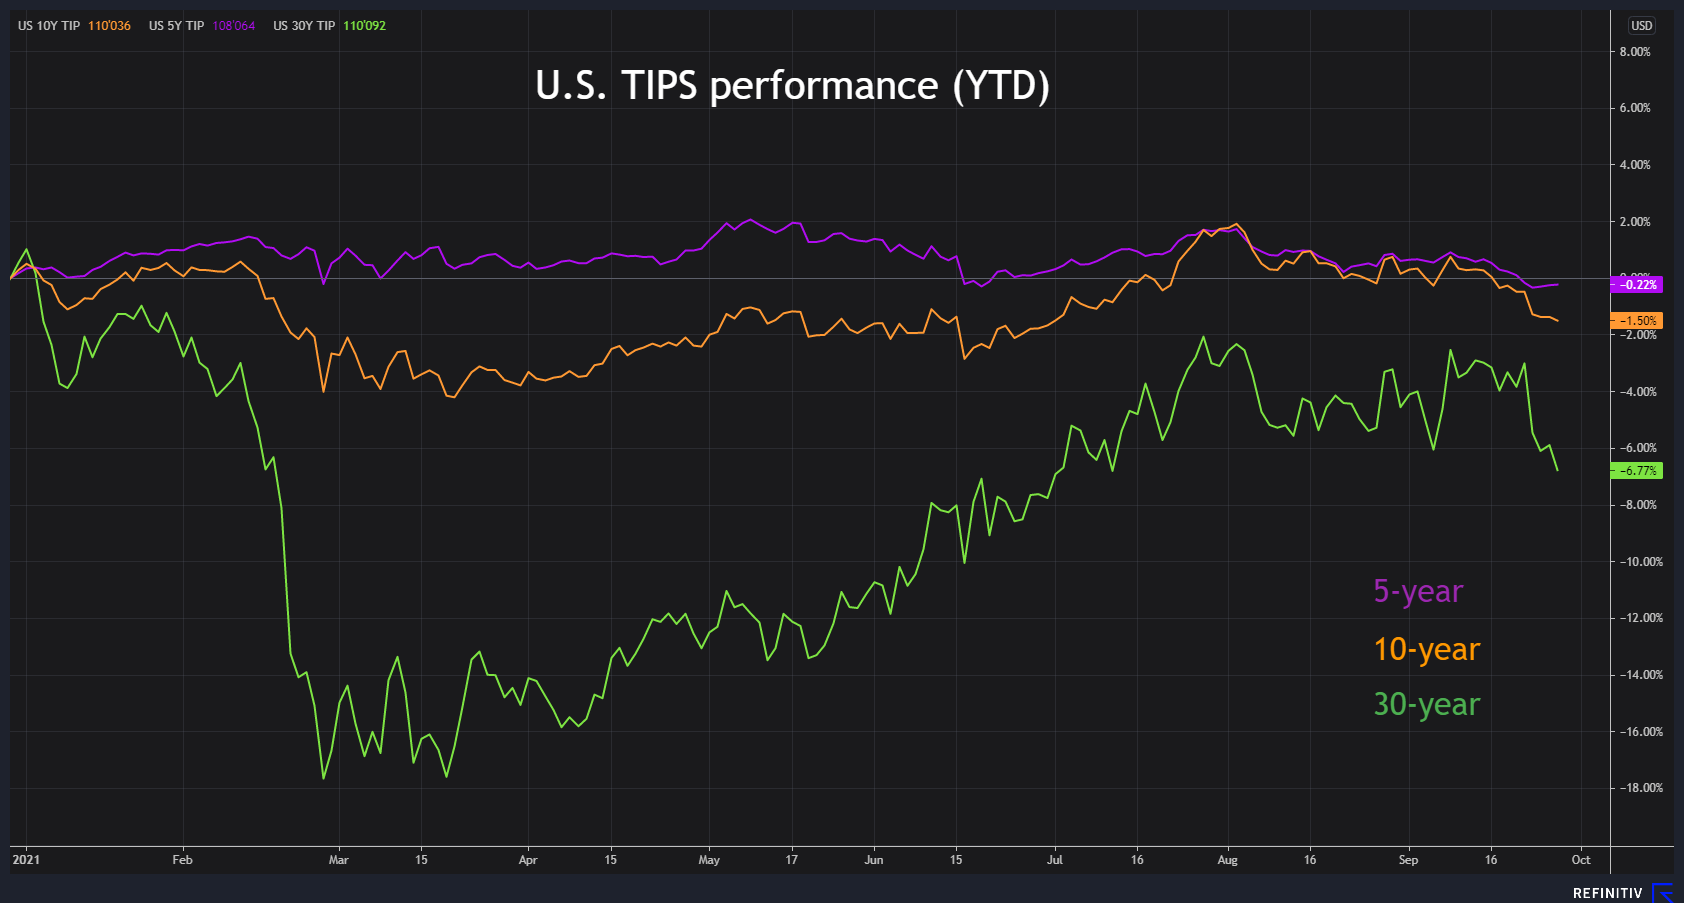 U.S. TIPS performance - YTD